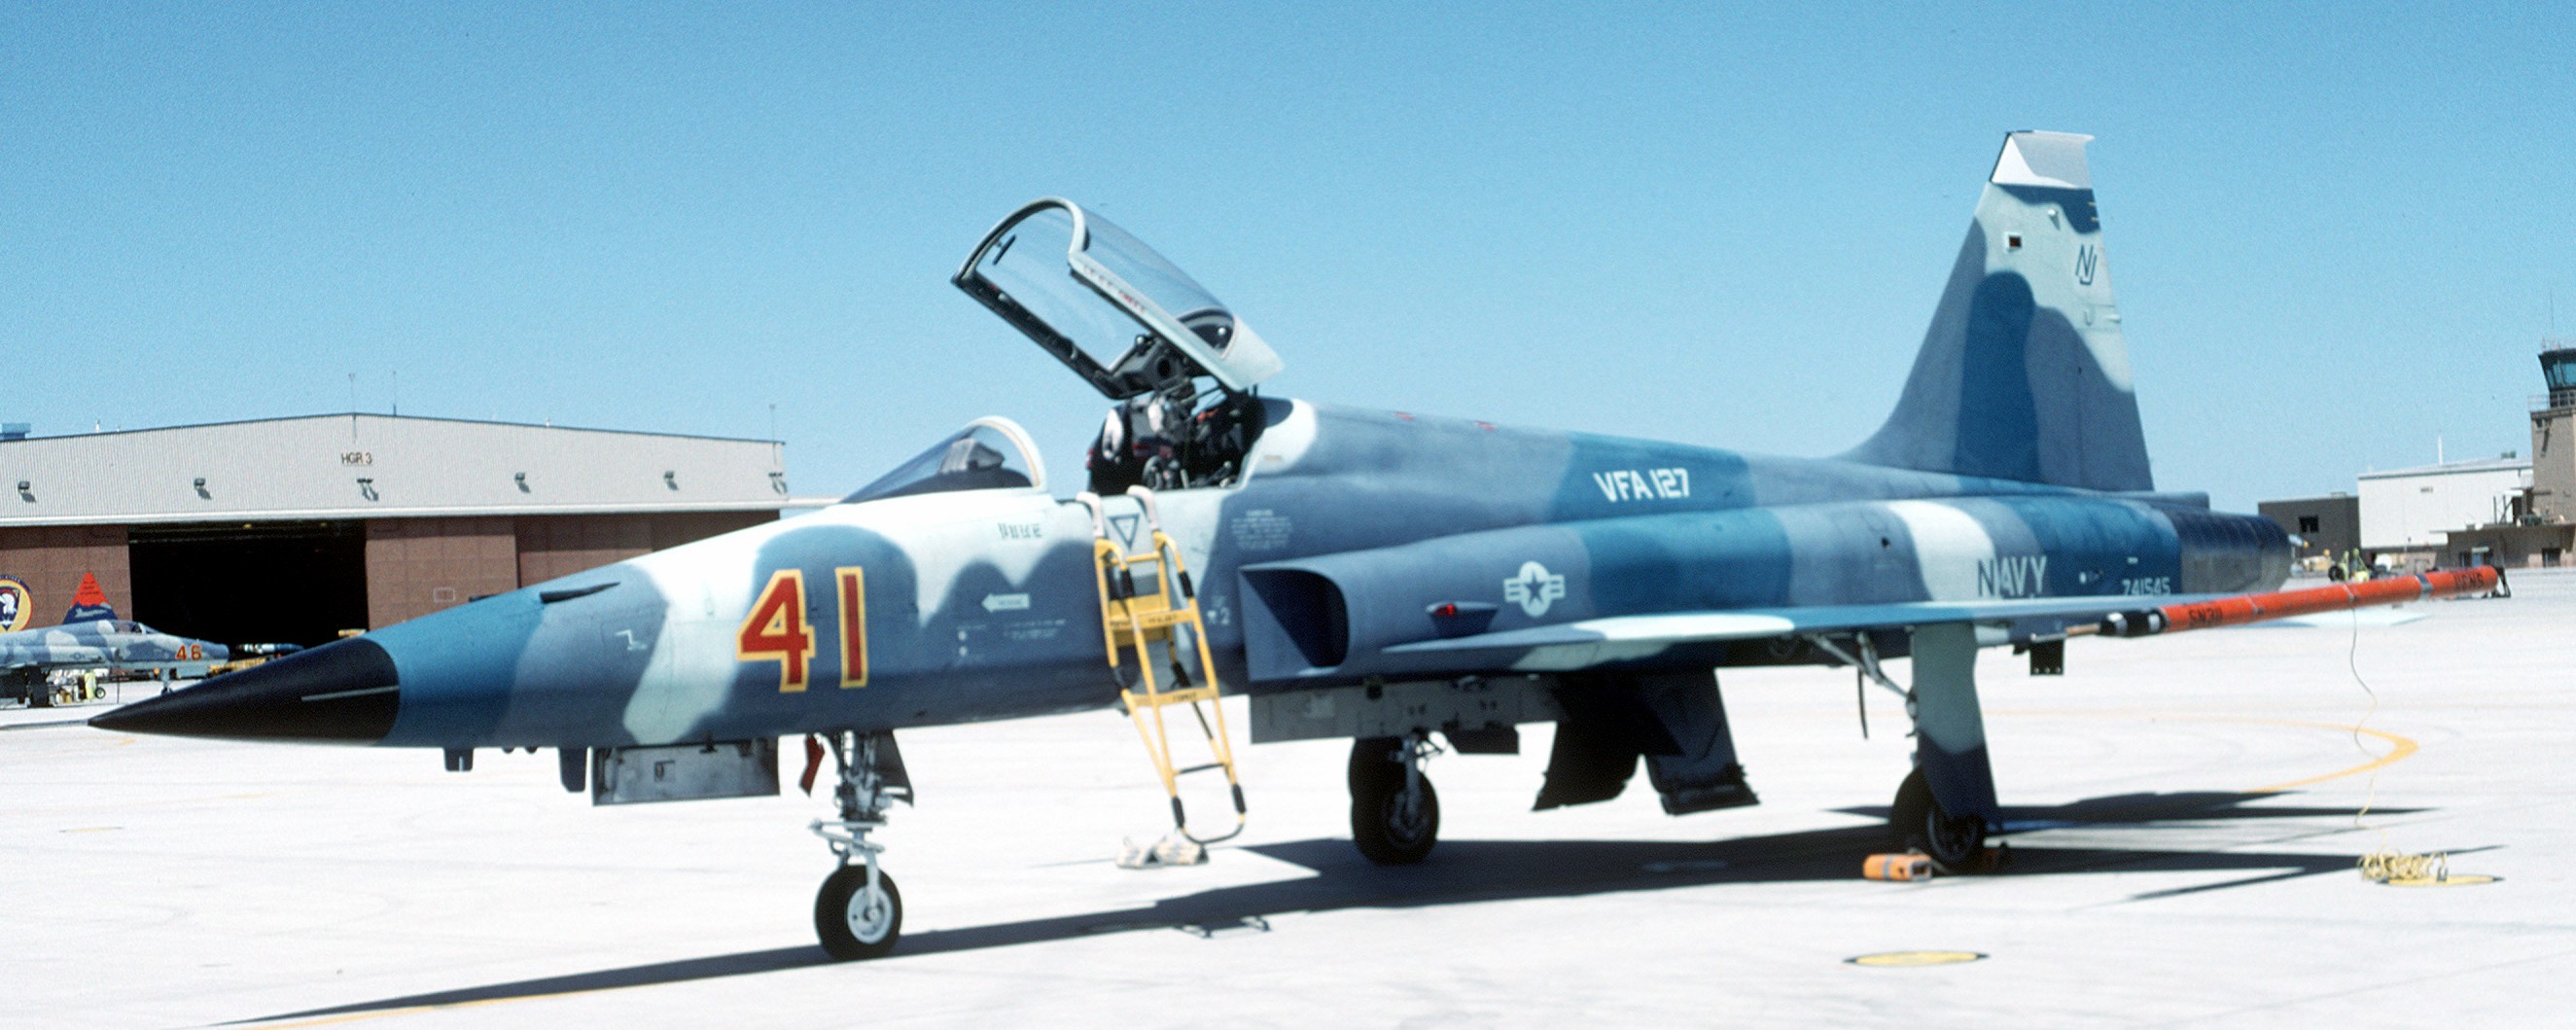 vfa-127 desert bogeys strike fighter squadron f-5e tiger 1993 04 nas fallon nevada